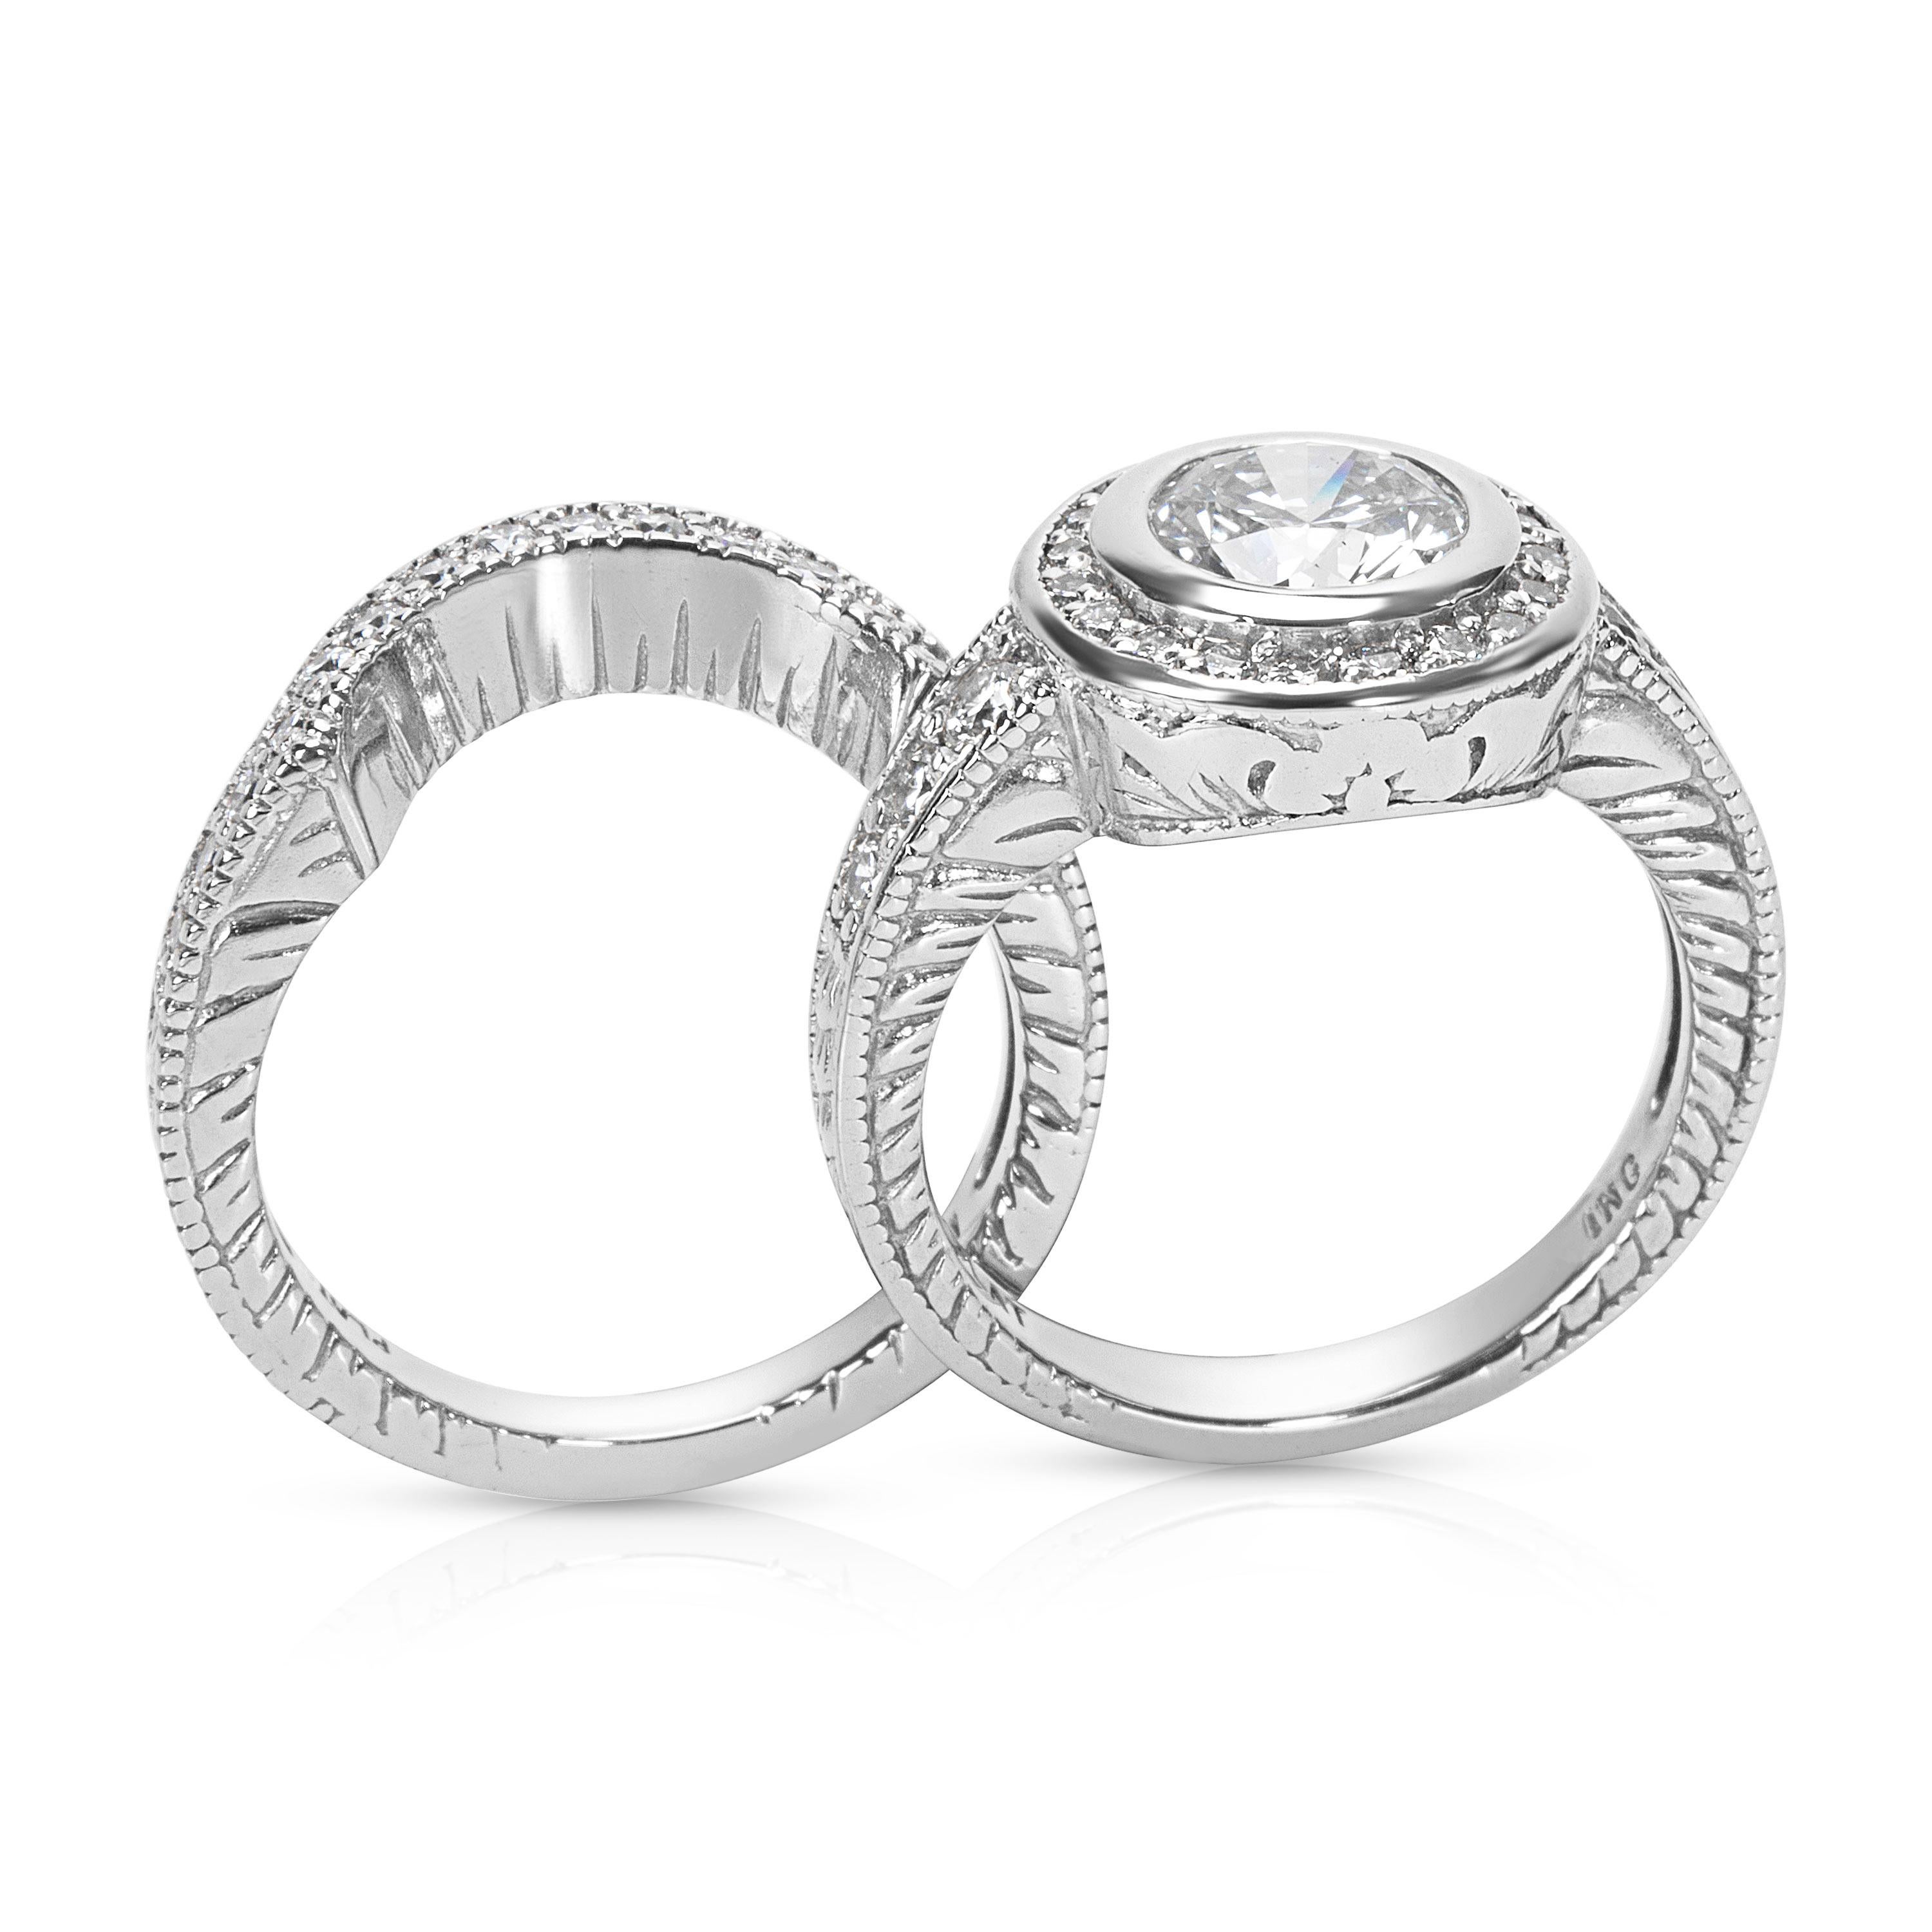 Round Cut GIA Certified Diamond Halo Engagement Wedding Set in Platinum F SI2 1.90 Carat